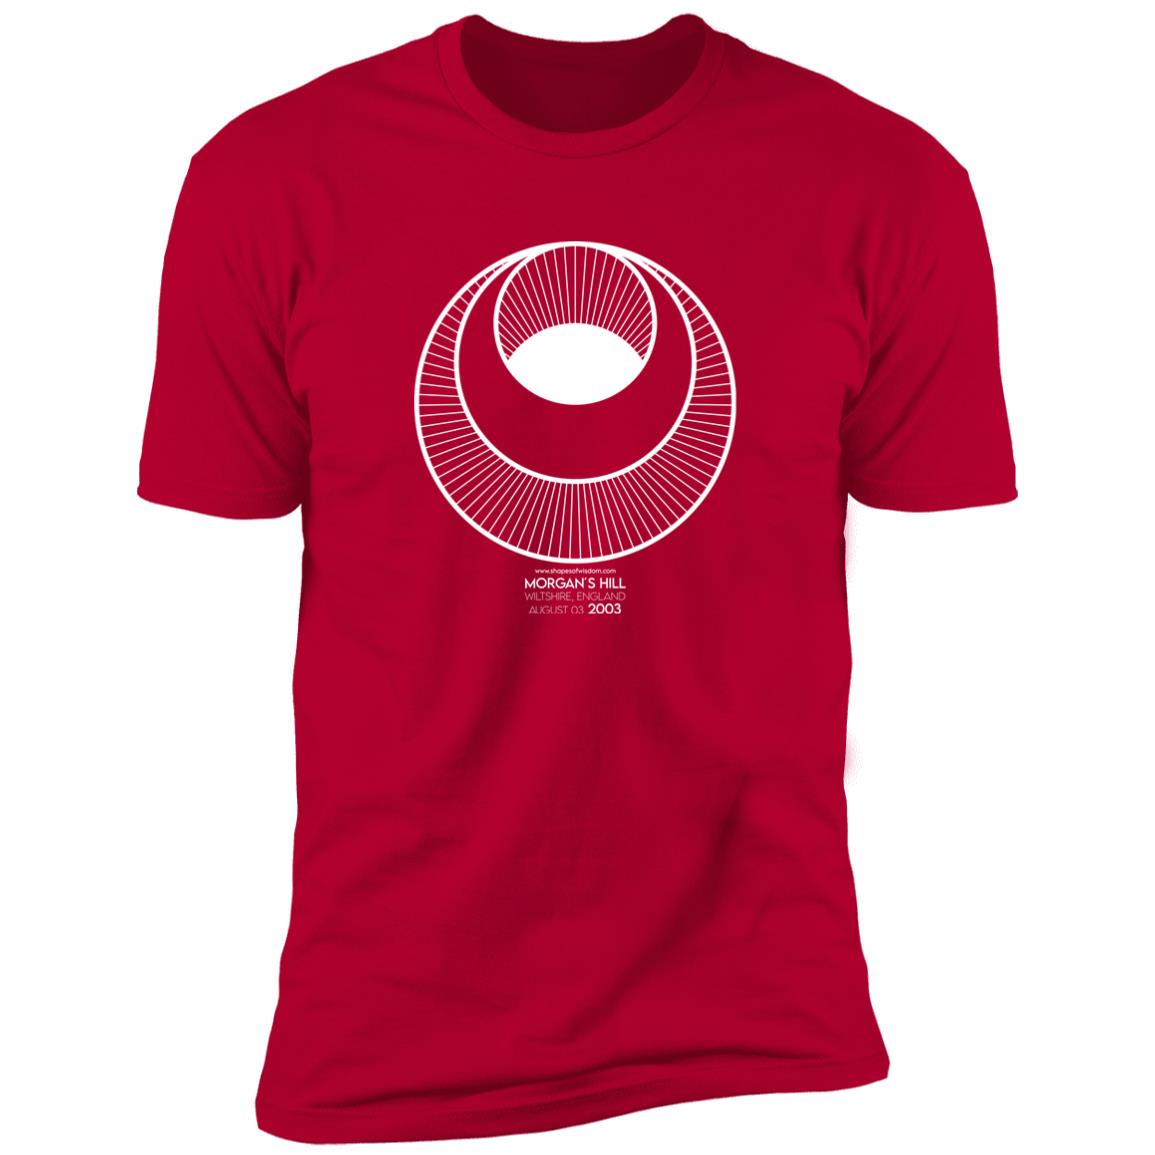 Crop Circle Premium T-Shirt - Morgan´s Hill 2